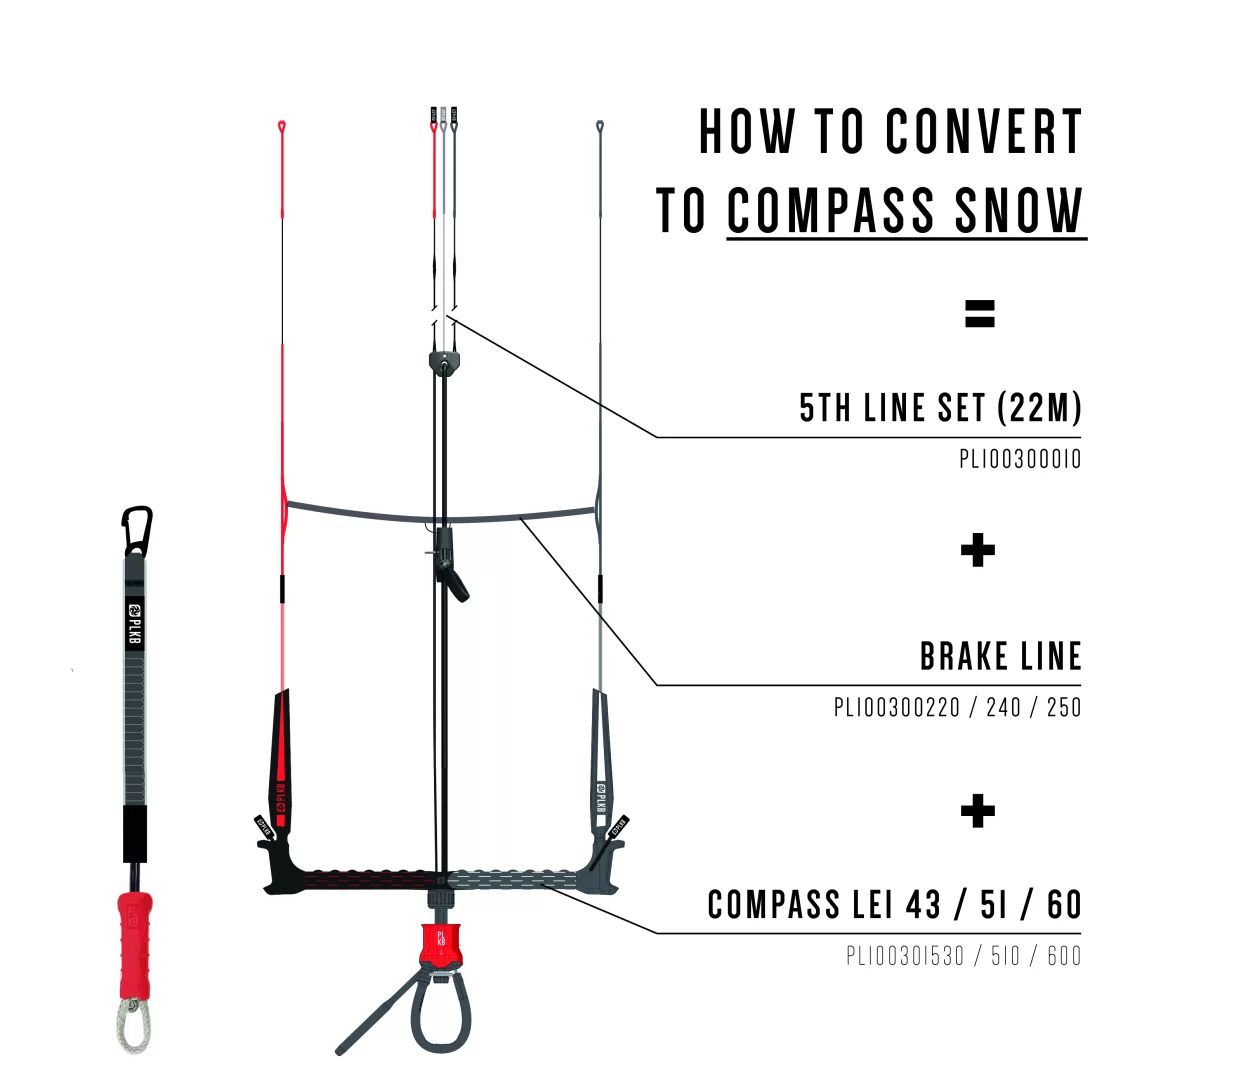 Compass Bar snow conversion